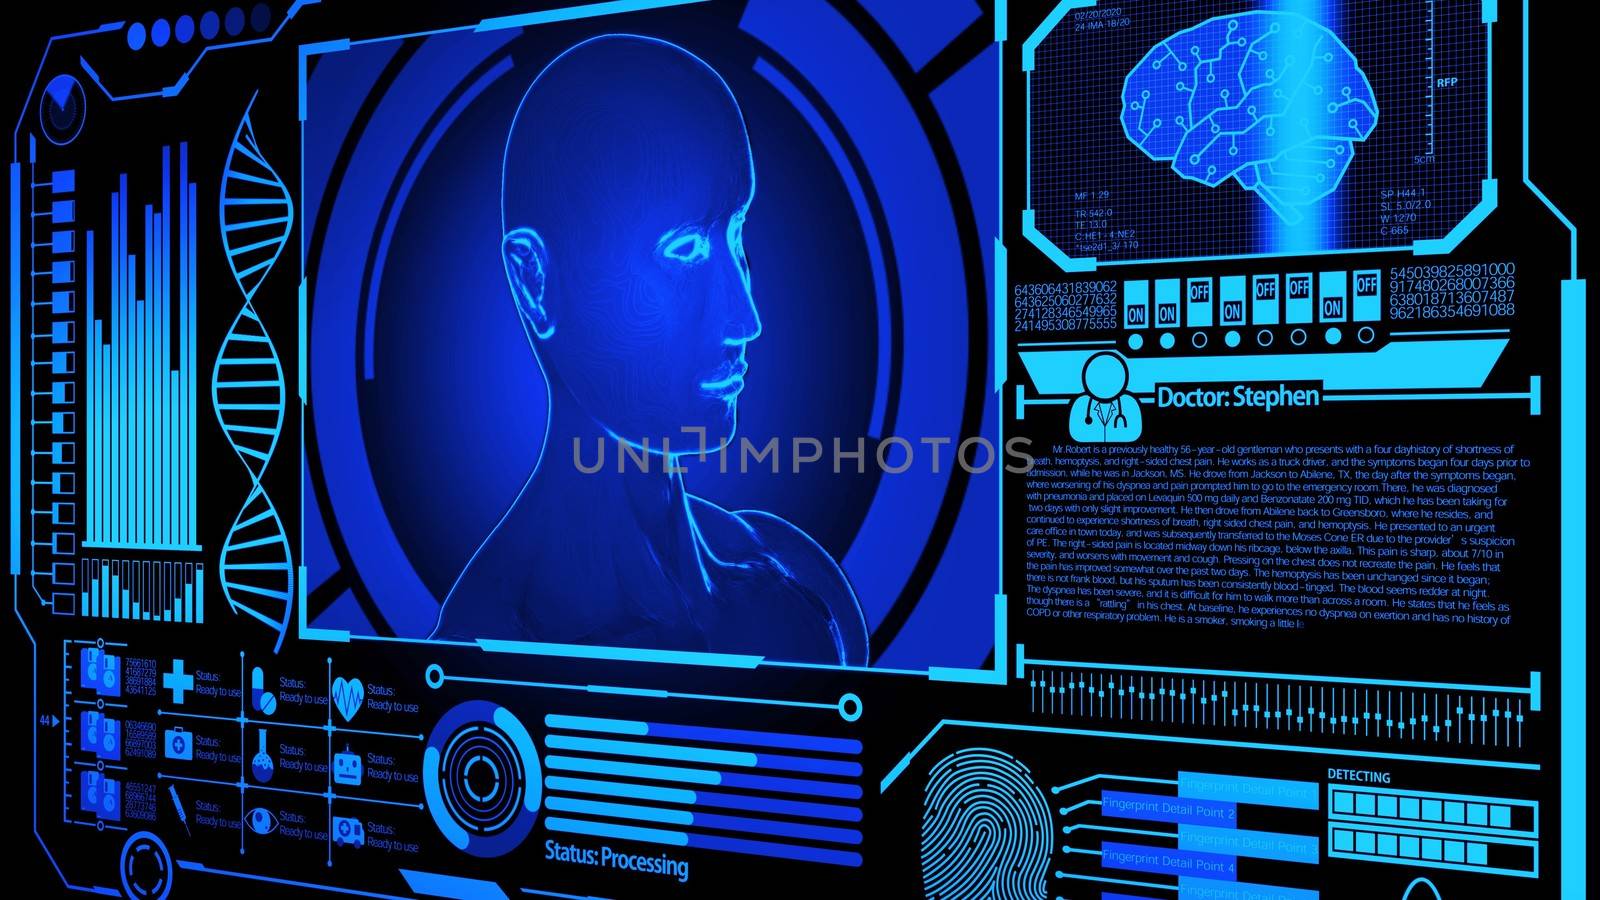 3D Human Head Model Rendering Rotating in Medical Futuristic HUD Display Screen including DNA, Digital Brain Scan, Fingerprint and more with Blue Color Still Image Ver.3